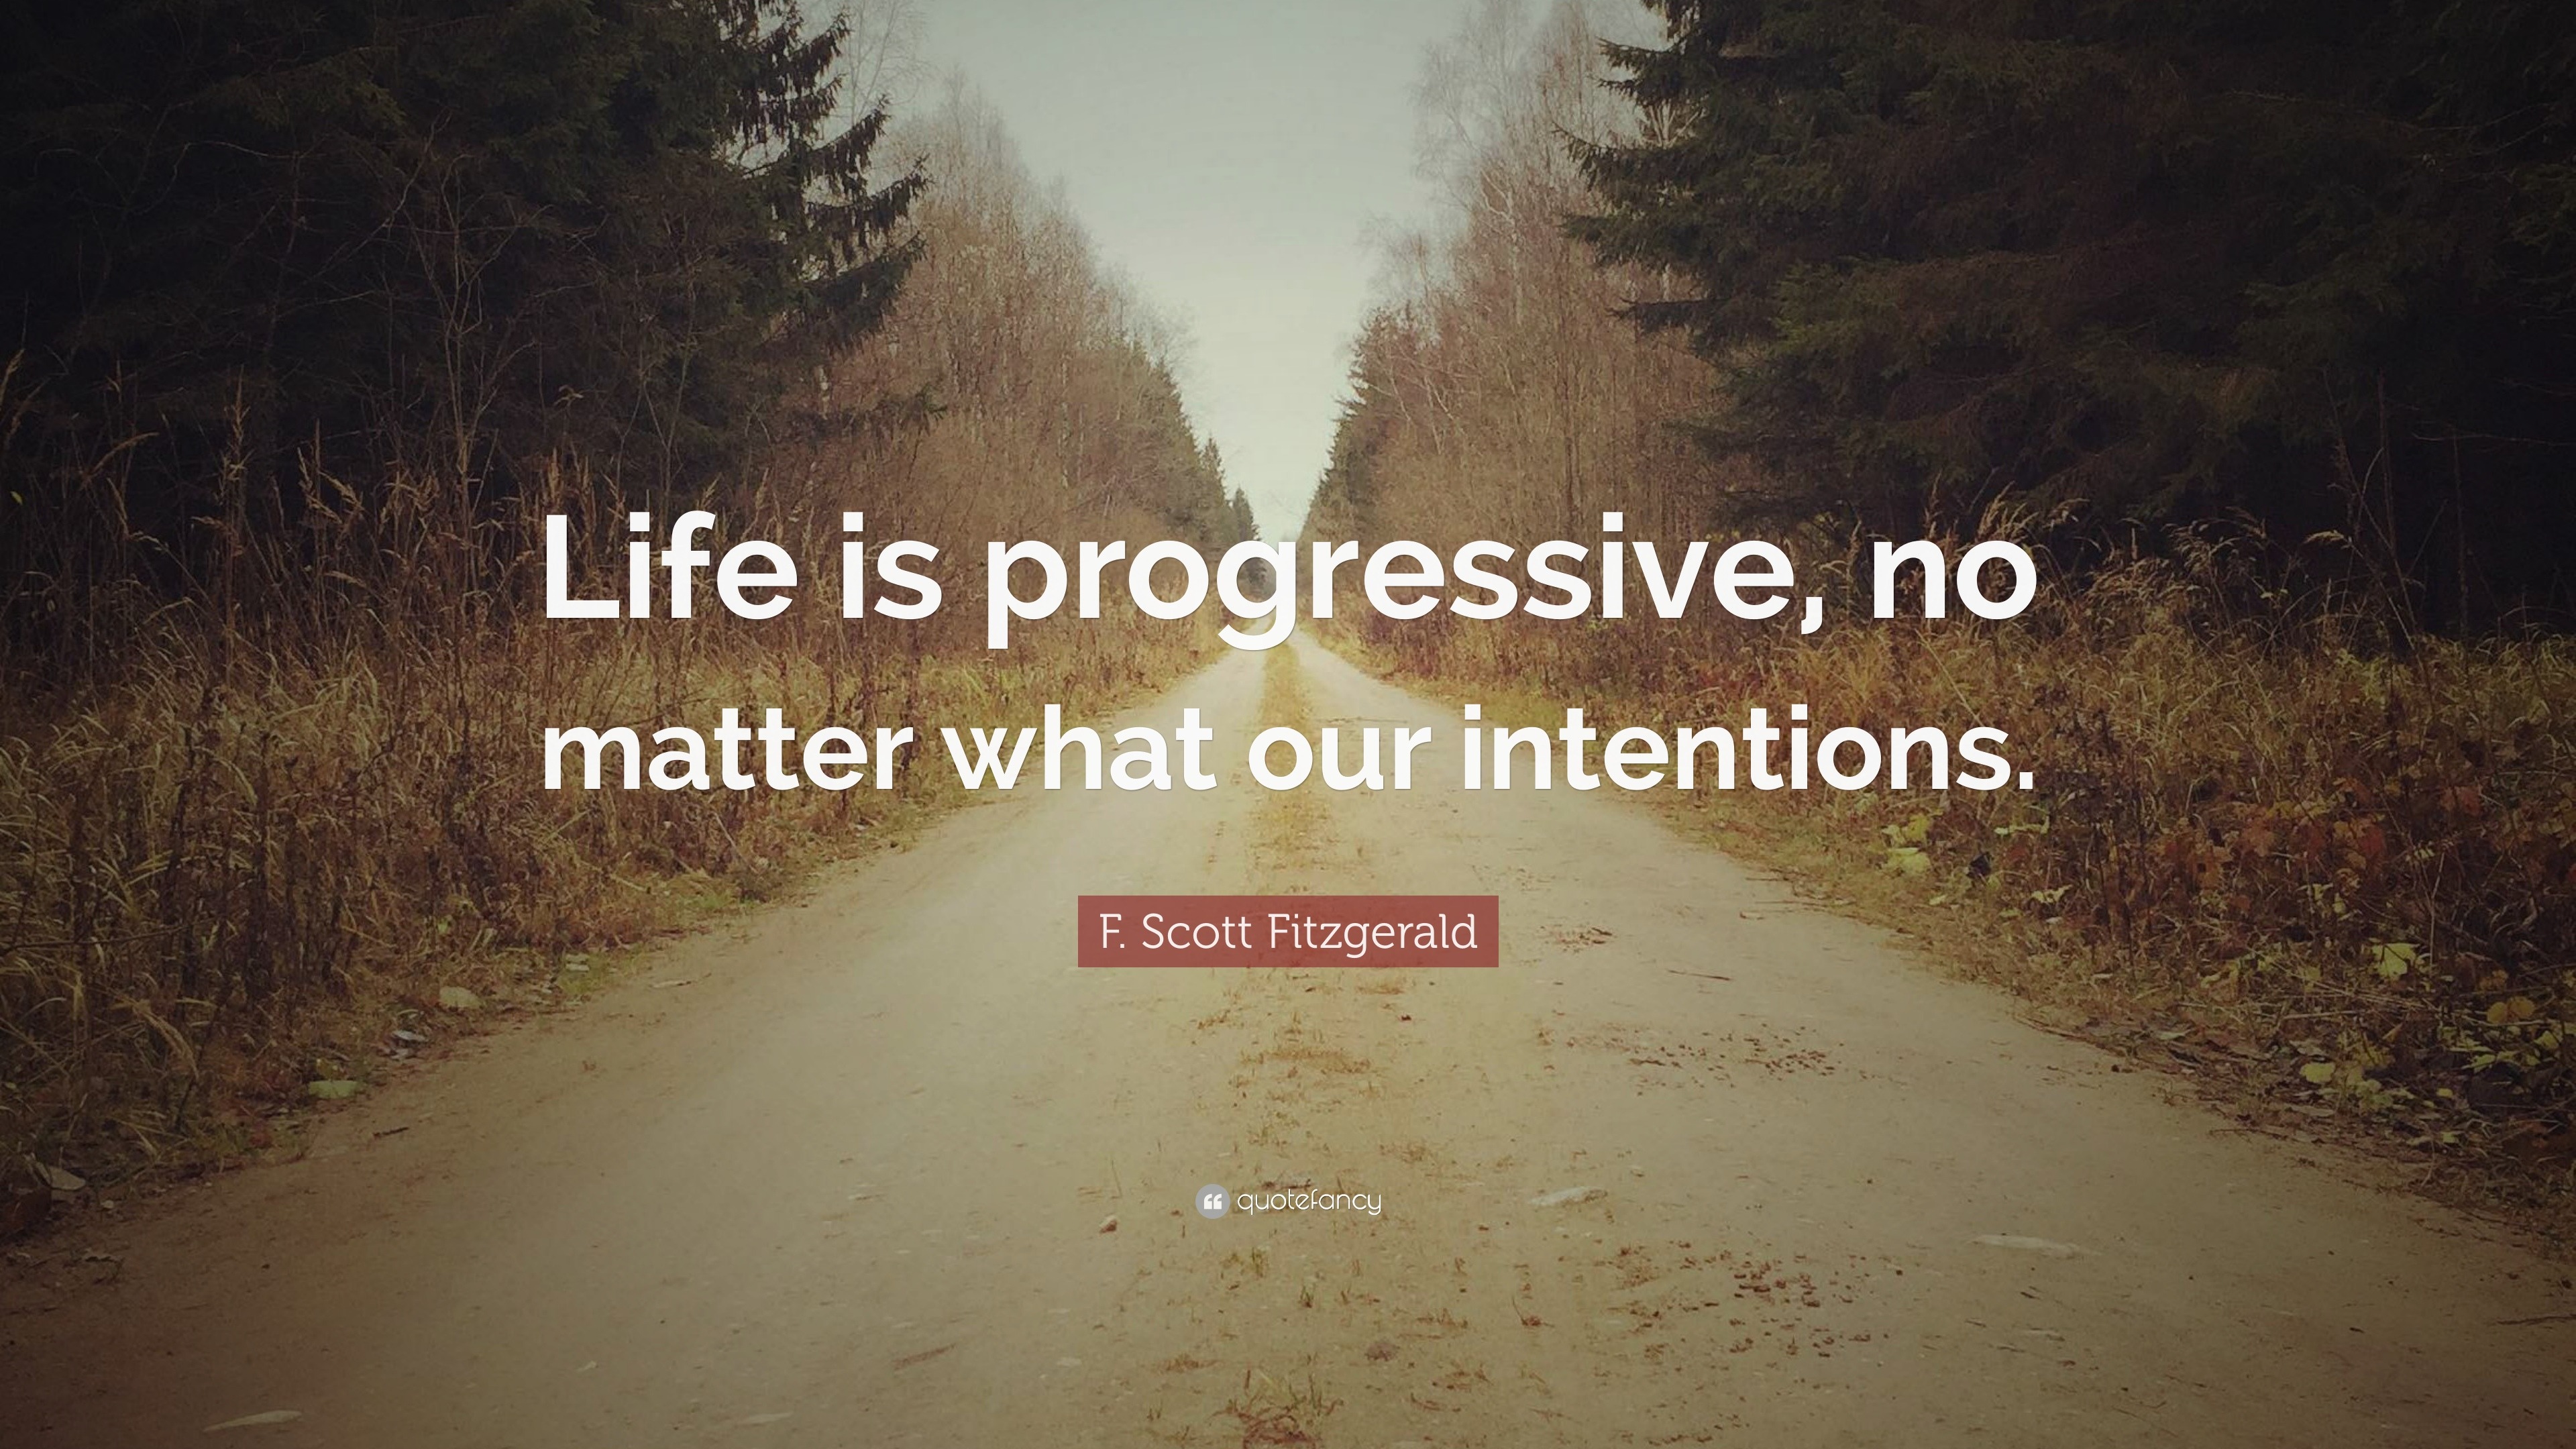 F. Scott Fitzgerald Quote “Life is progressive, no matter